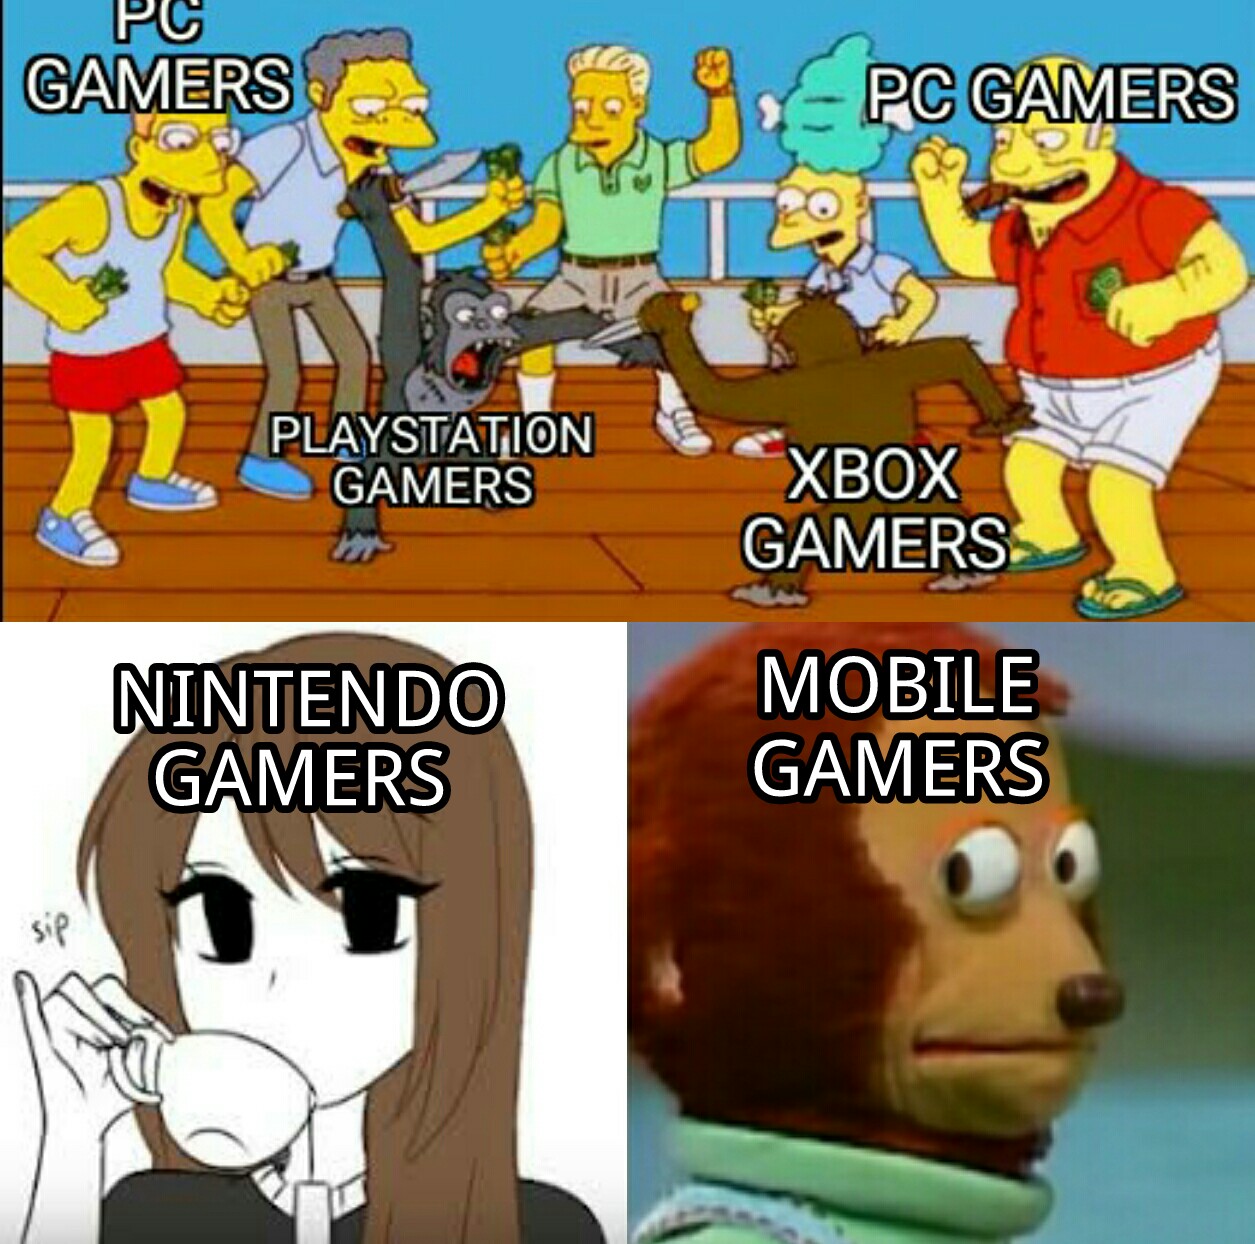 dank memes- nintendo memes - monkey fighting meme - Gamers Pc Gamers 21 Playstation Gamers Xbox Gamers Nintendo Gamers Mobile Gamers sip